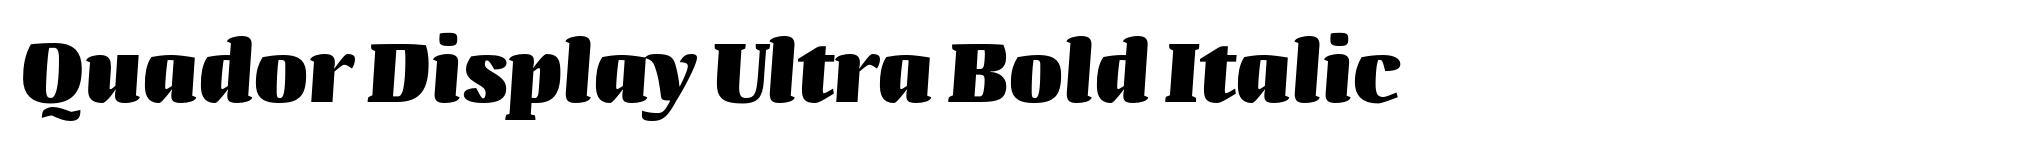 Quador Display Ultra Bold Italic image